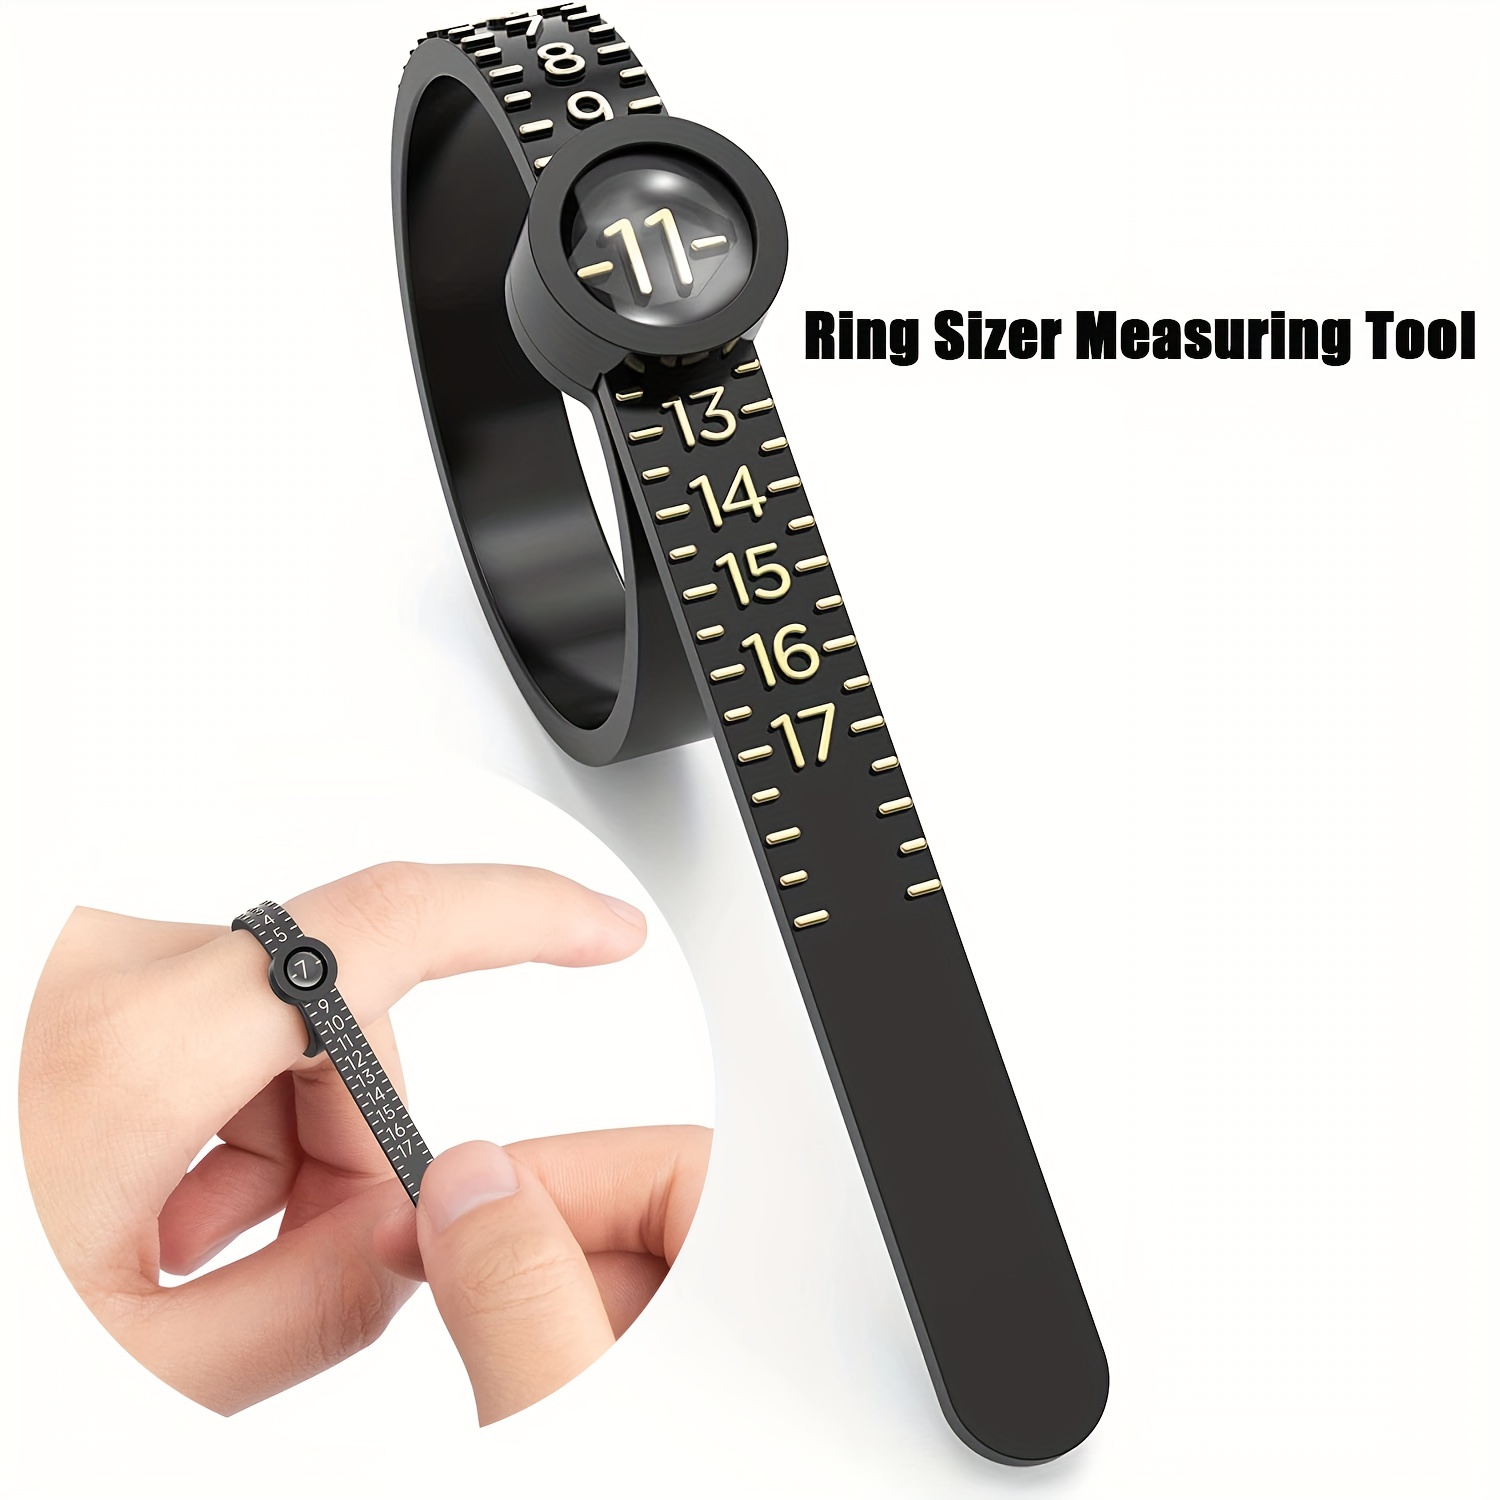  Ring Sizer Measure Finger Gauge Scale Measure Tool Finger Stick  Wedding Ring Tester Ruler, Ring Finger Sizer Gauge, Ribbon (1-17 US Sizes)  : Arts, Crafts & Sewing